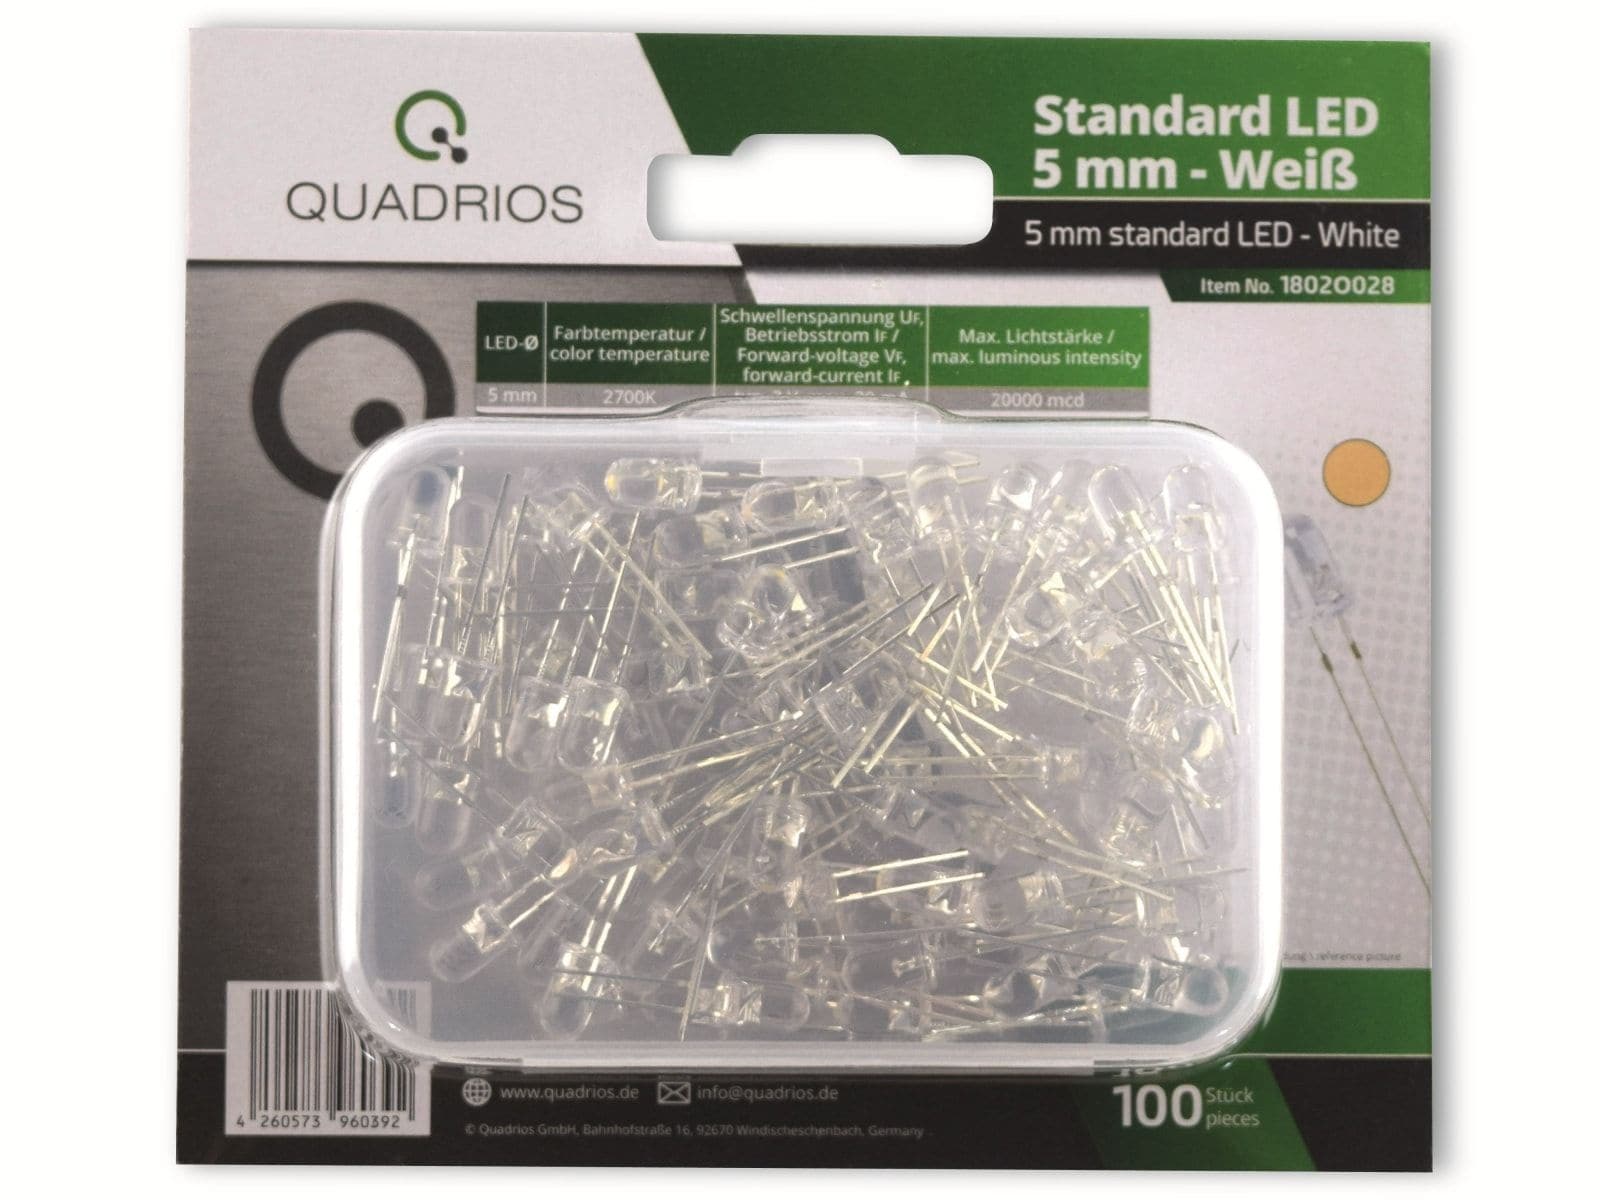 QUADRIOS, 1802O028, LED Sortiment 5 mm Leuchtdioden Warmweiss (20000 mcd) 100 tlg von QUADRIOS